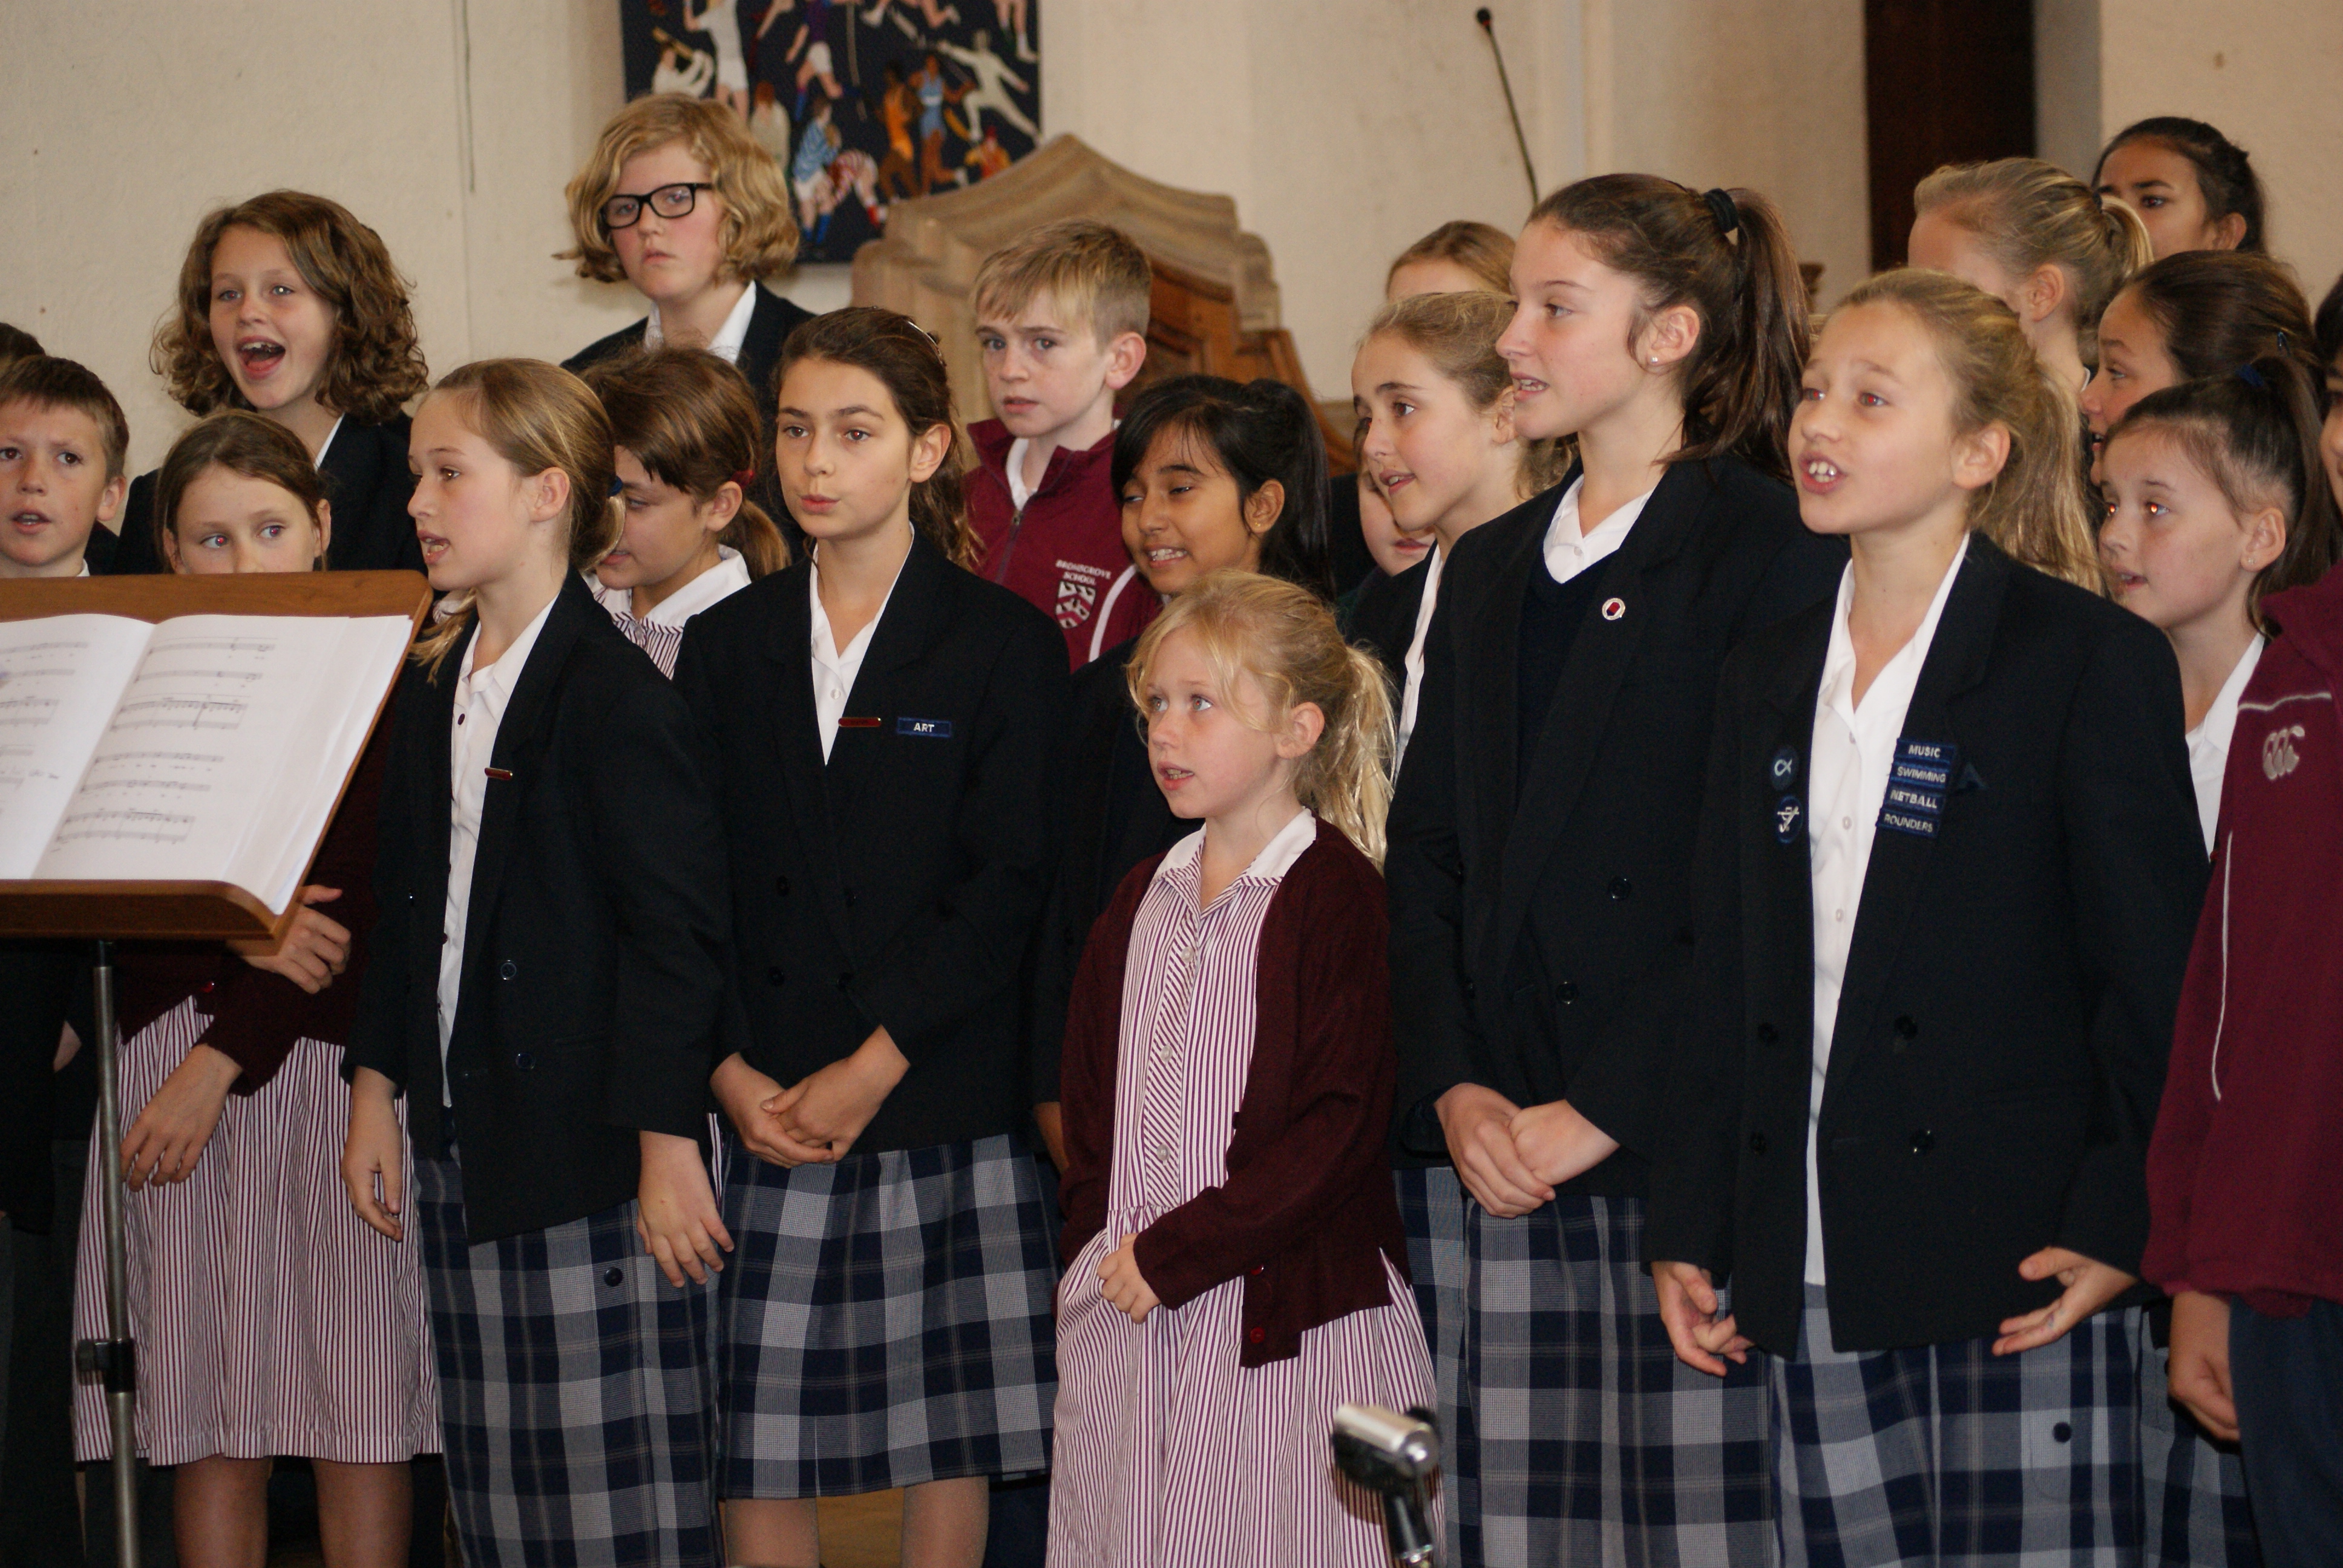 The Prep Choir performing their chosen Christmas Carol